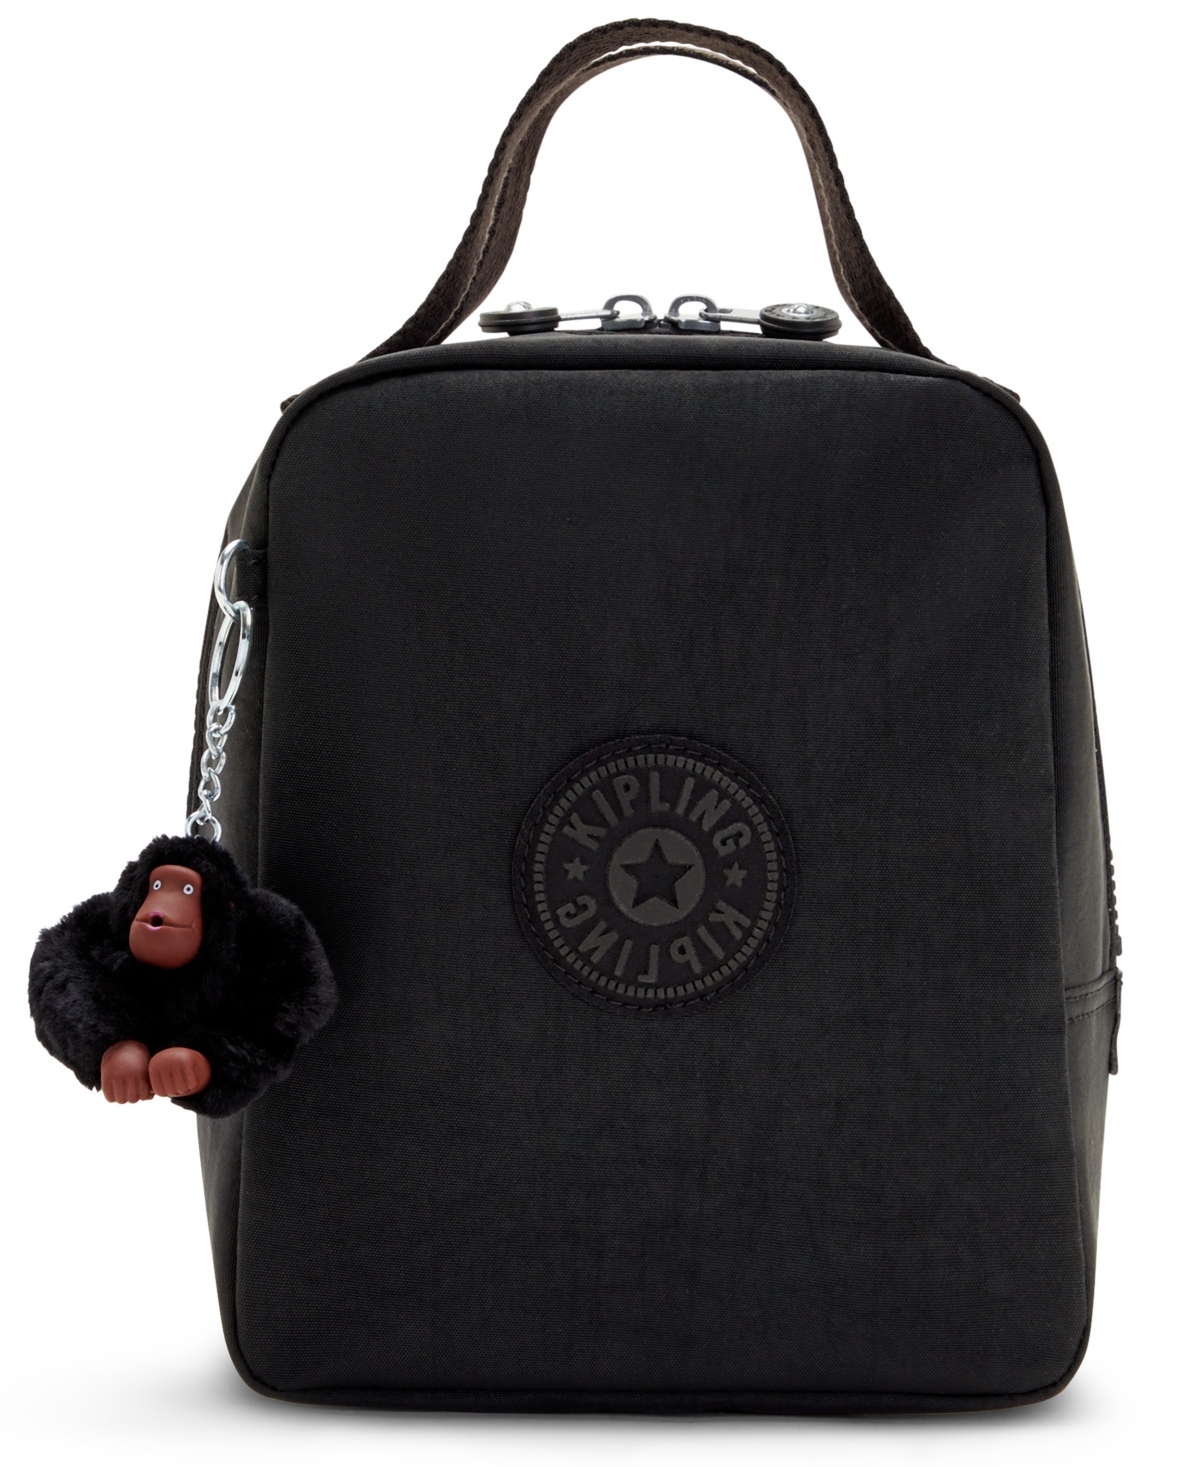 Lyla Insulated Lunch Bag - True Black